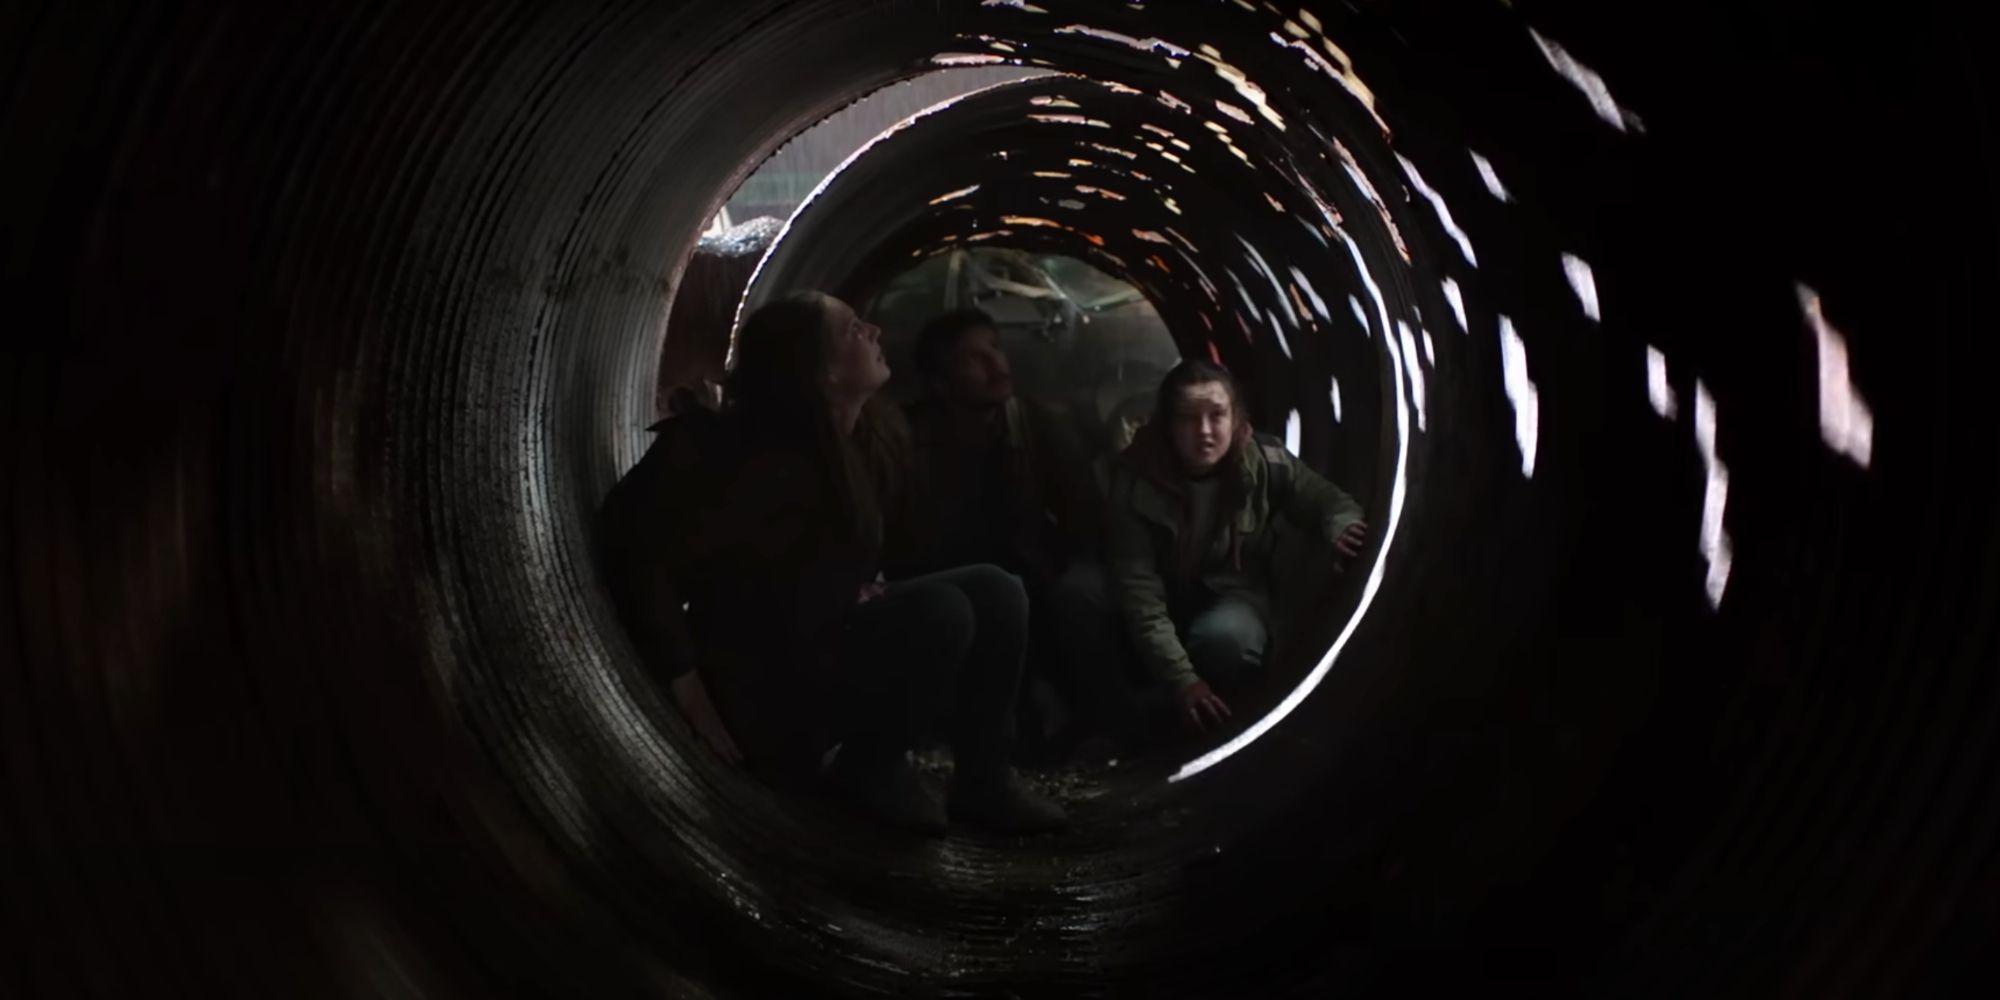 The Last of Us tunnels ellie, joel, and tess